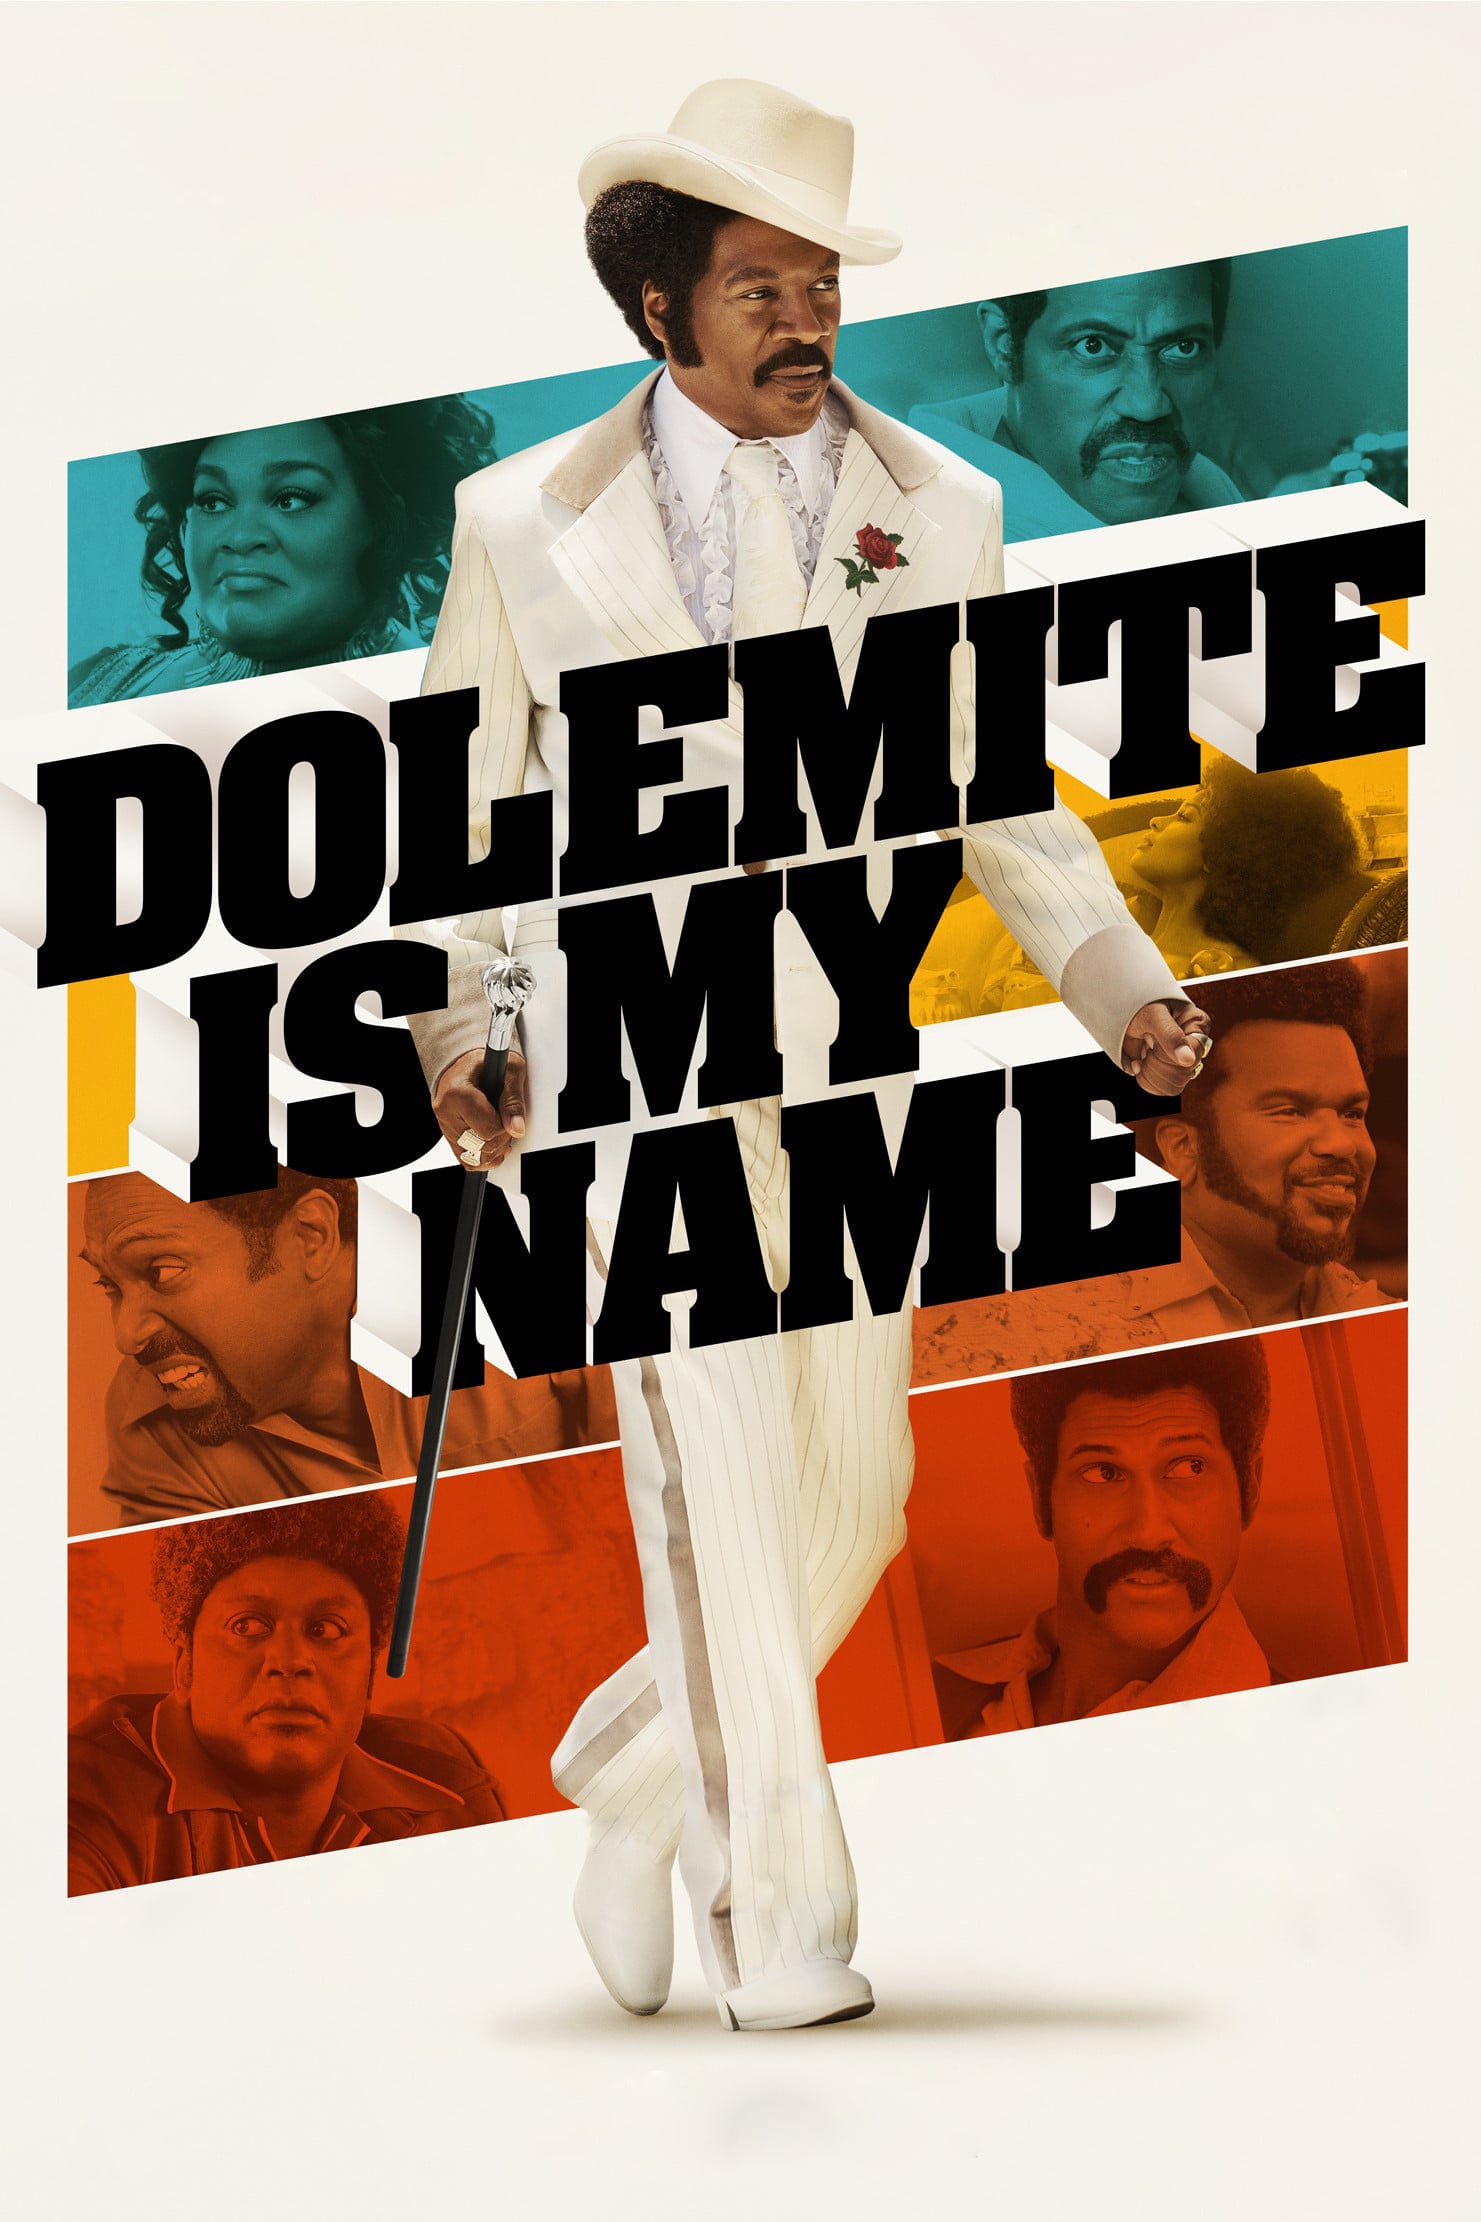 Mi nombre es Dolemite